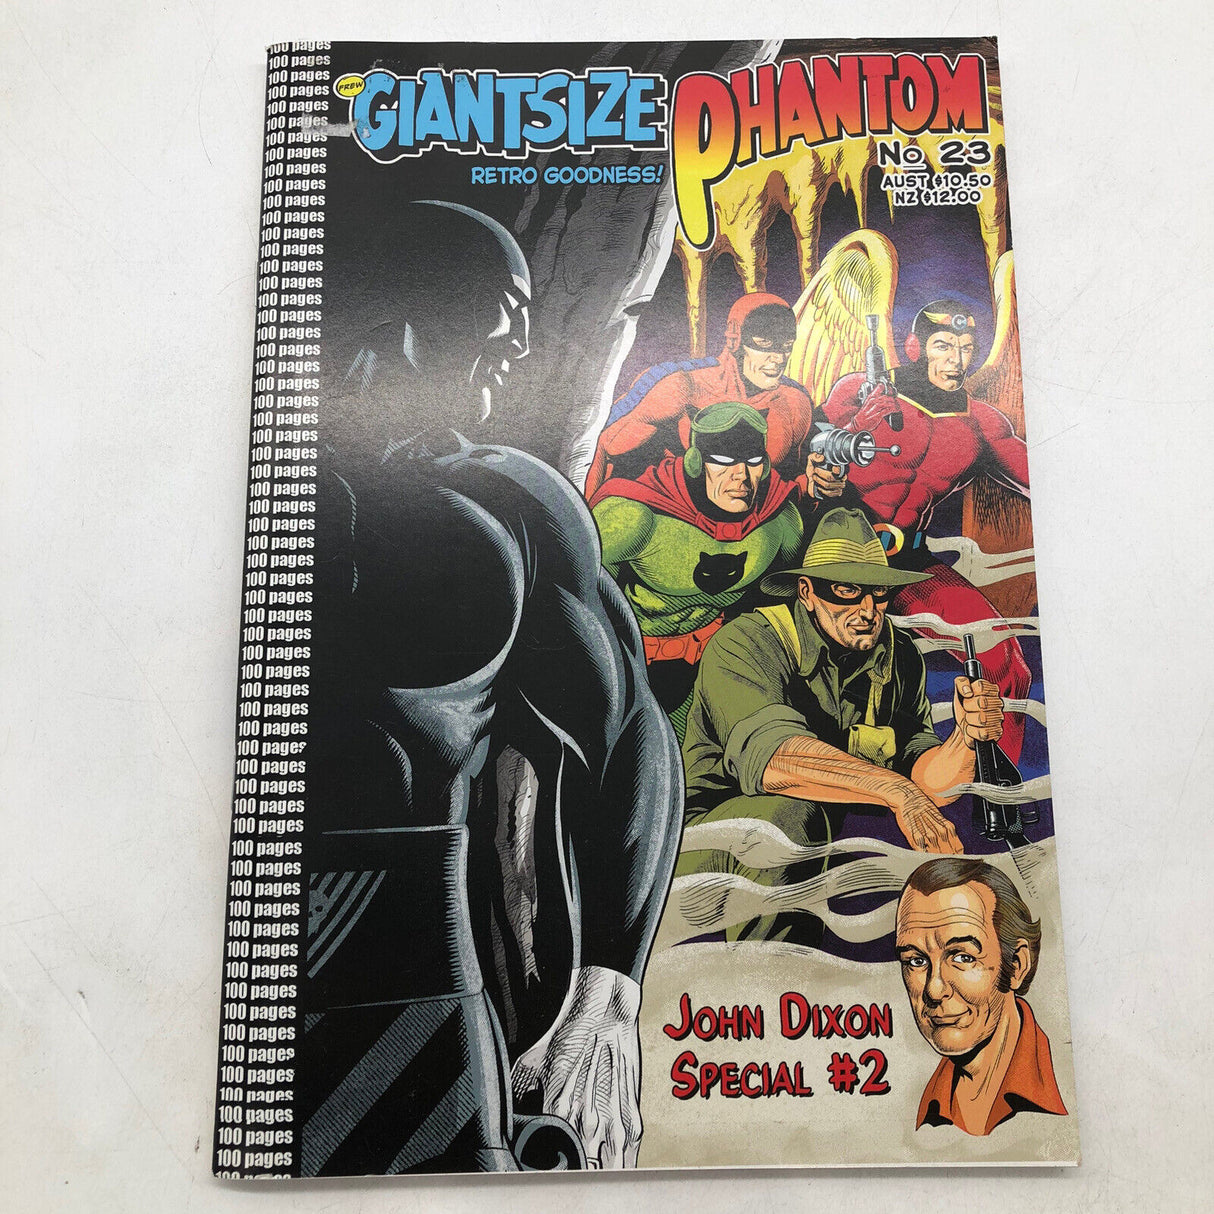 Giant Size Phantom #23 John Dixon Special #2 Comic Book